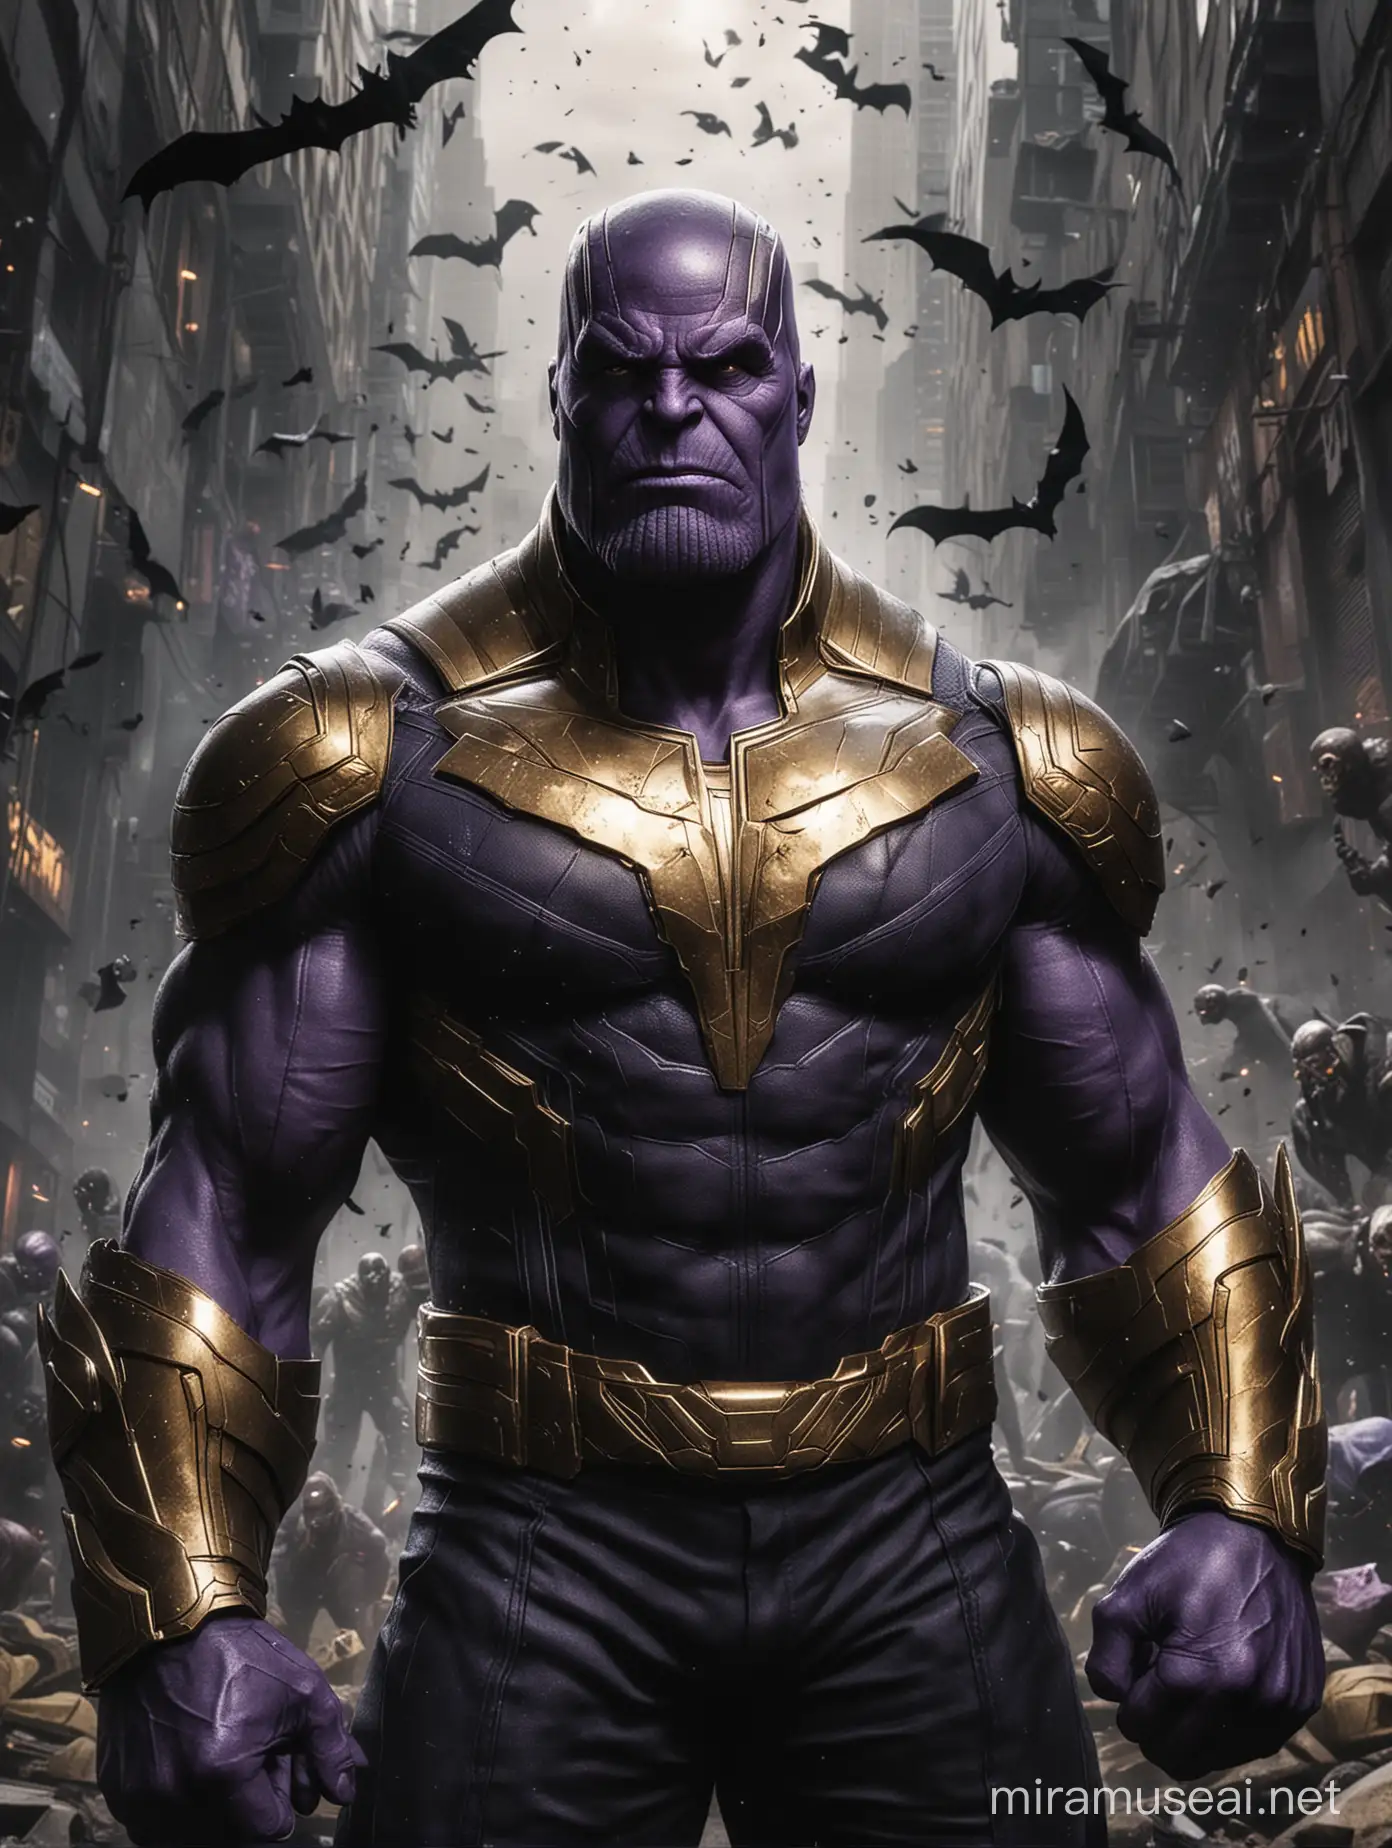 Dark Avenger Thanos Vigilante Justice in Gotham City